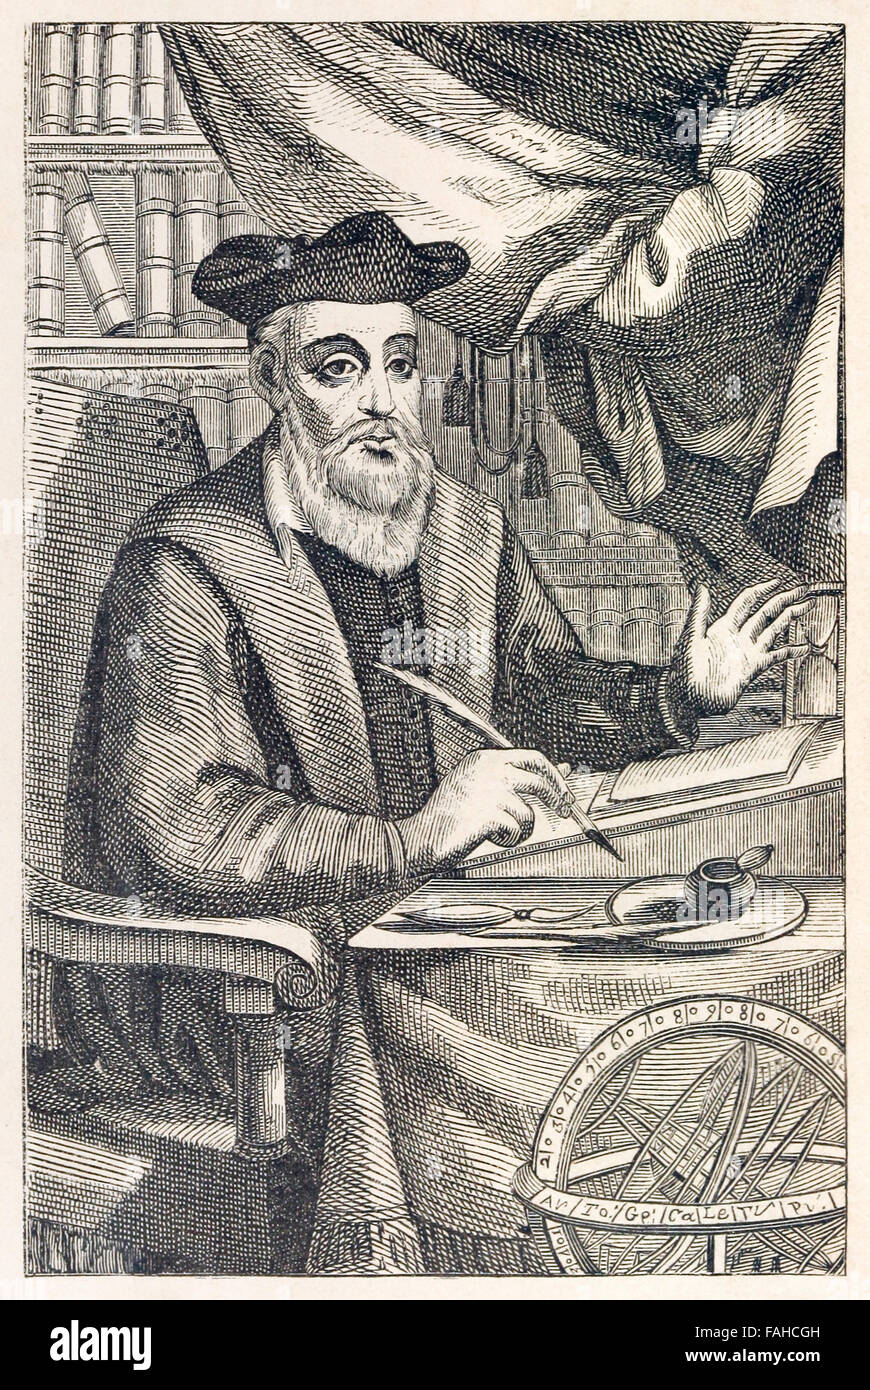 Nostradamus (1503-1566) writing his prophecies, frontispiece from a 1611 edition of 'Les Propheties de M. Michel Nostradamvs'. See description for more information. Stock Photo